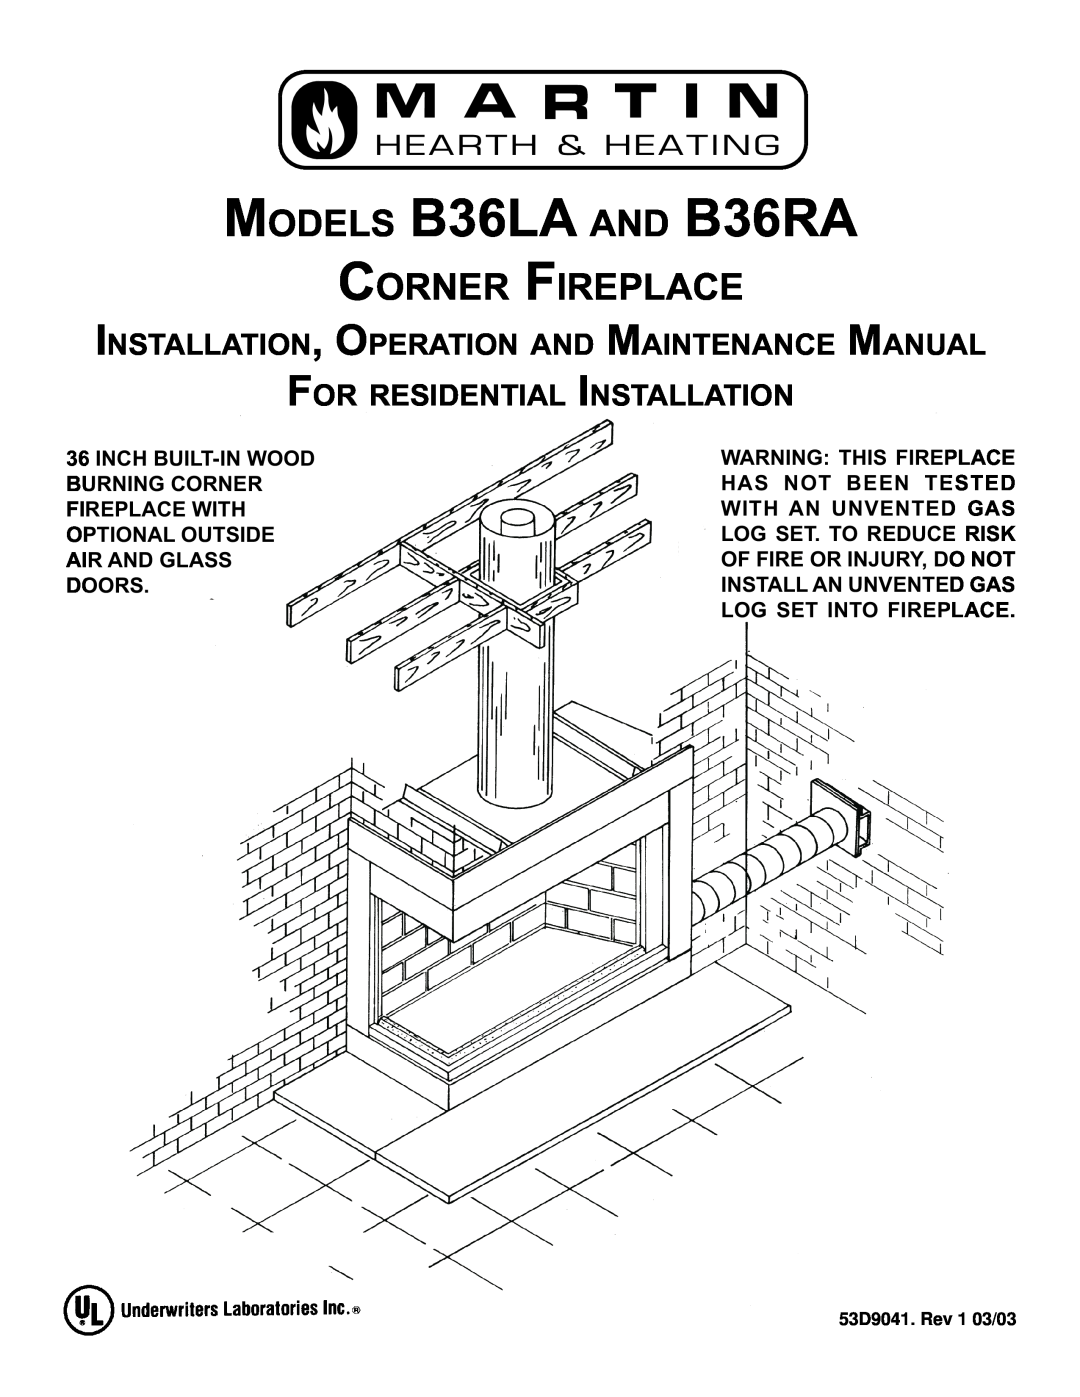 Martin Fireplaces manual MODELS B36LA AND B36RA, Corner Fireplace, Installation, Operation And Maintenance Manual 